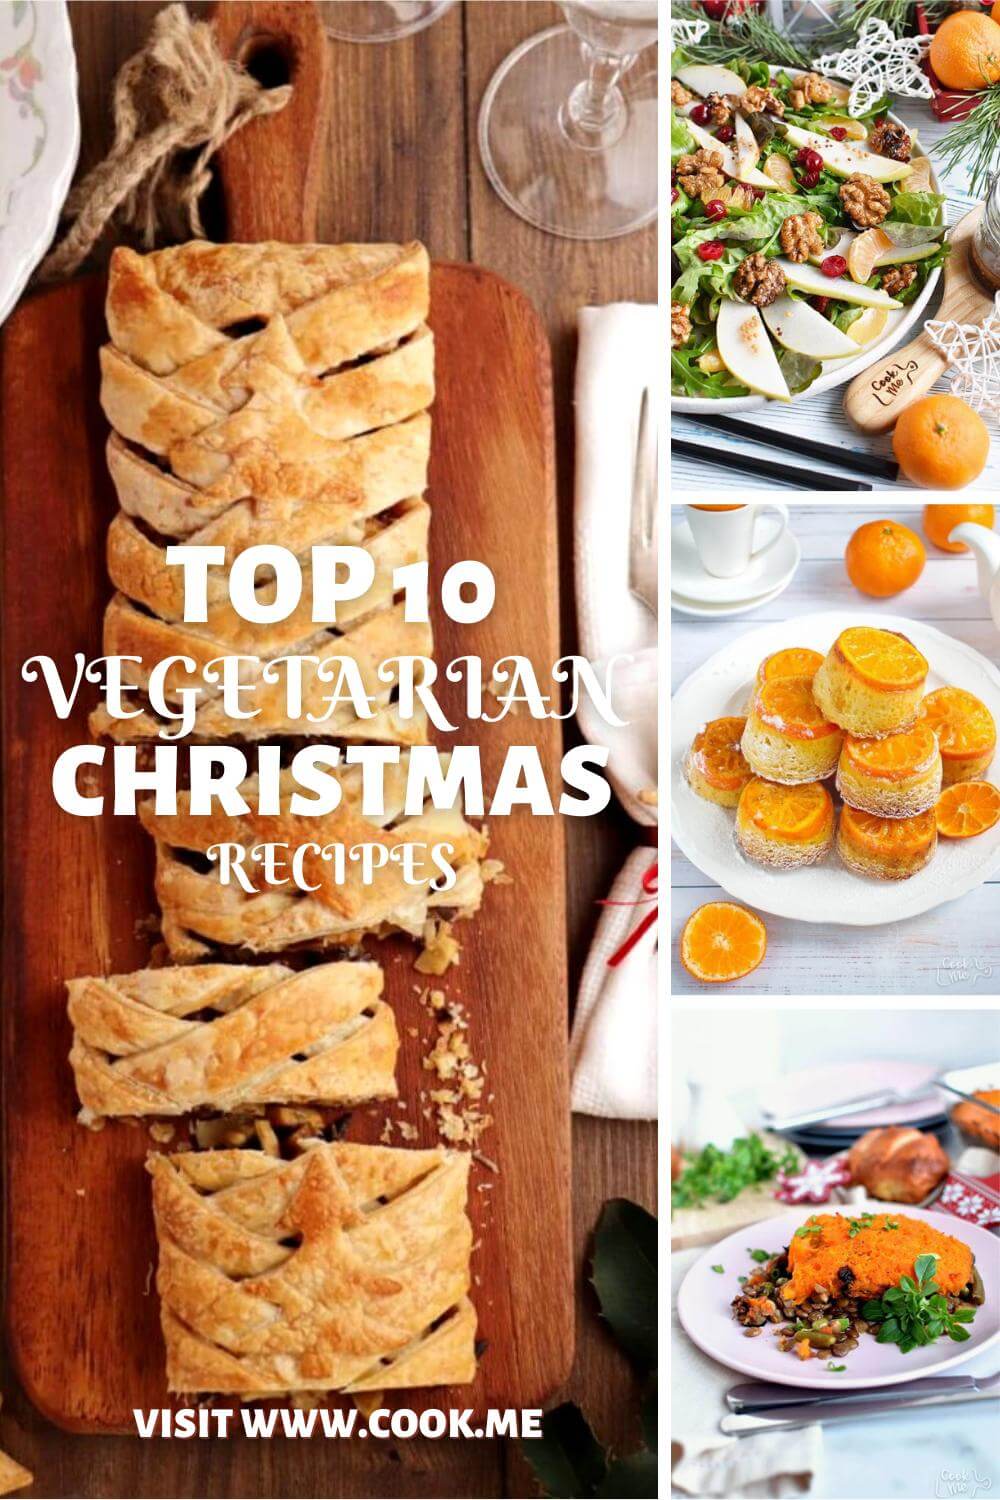 TOP 10 Vegetarian Christmas Recipes Cook.me Recipes